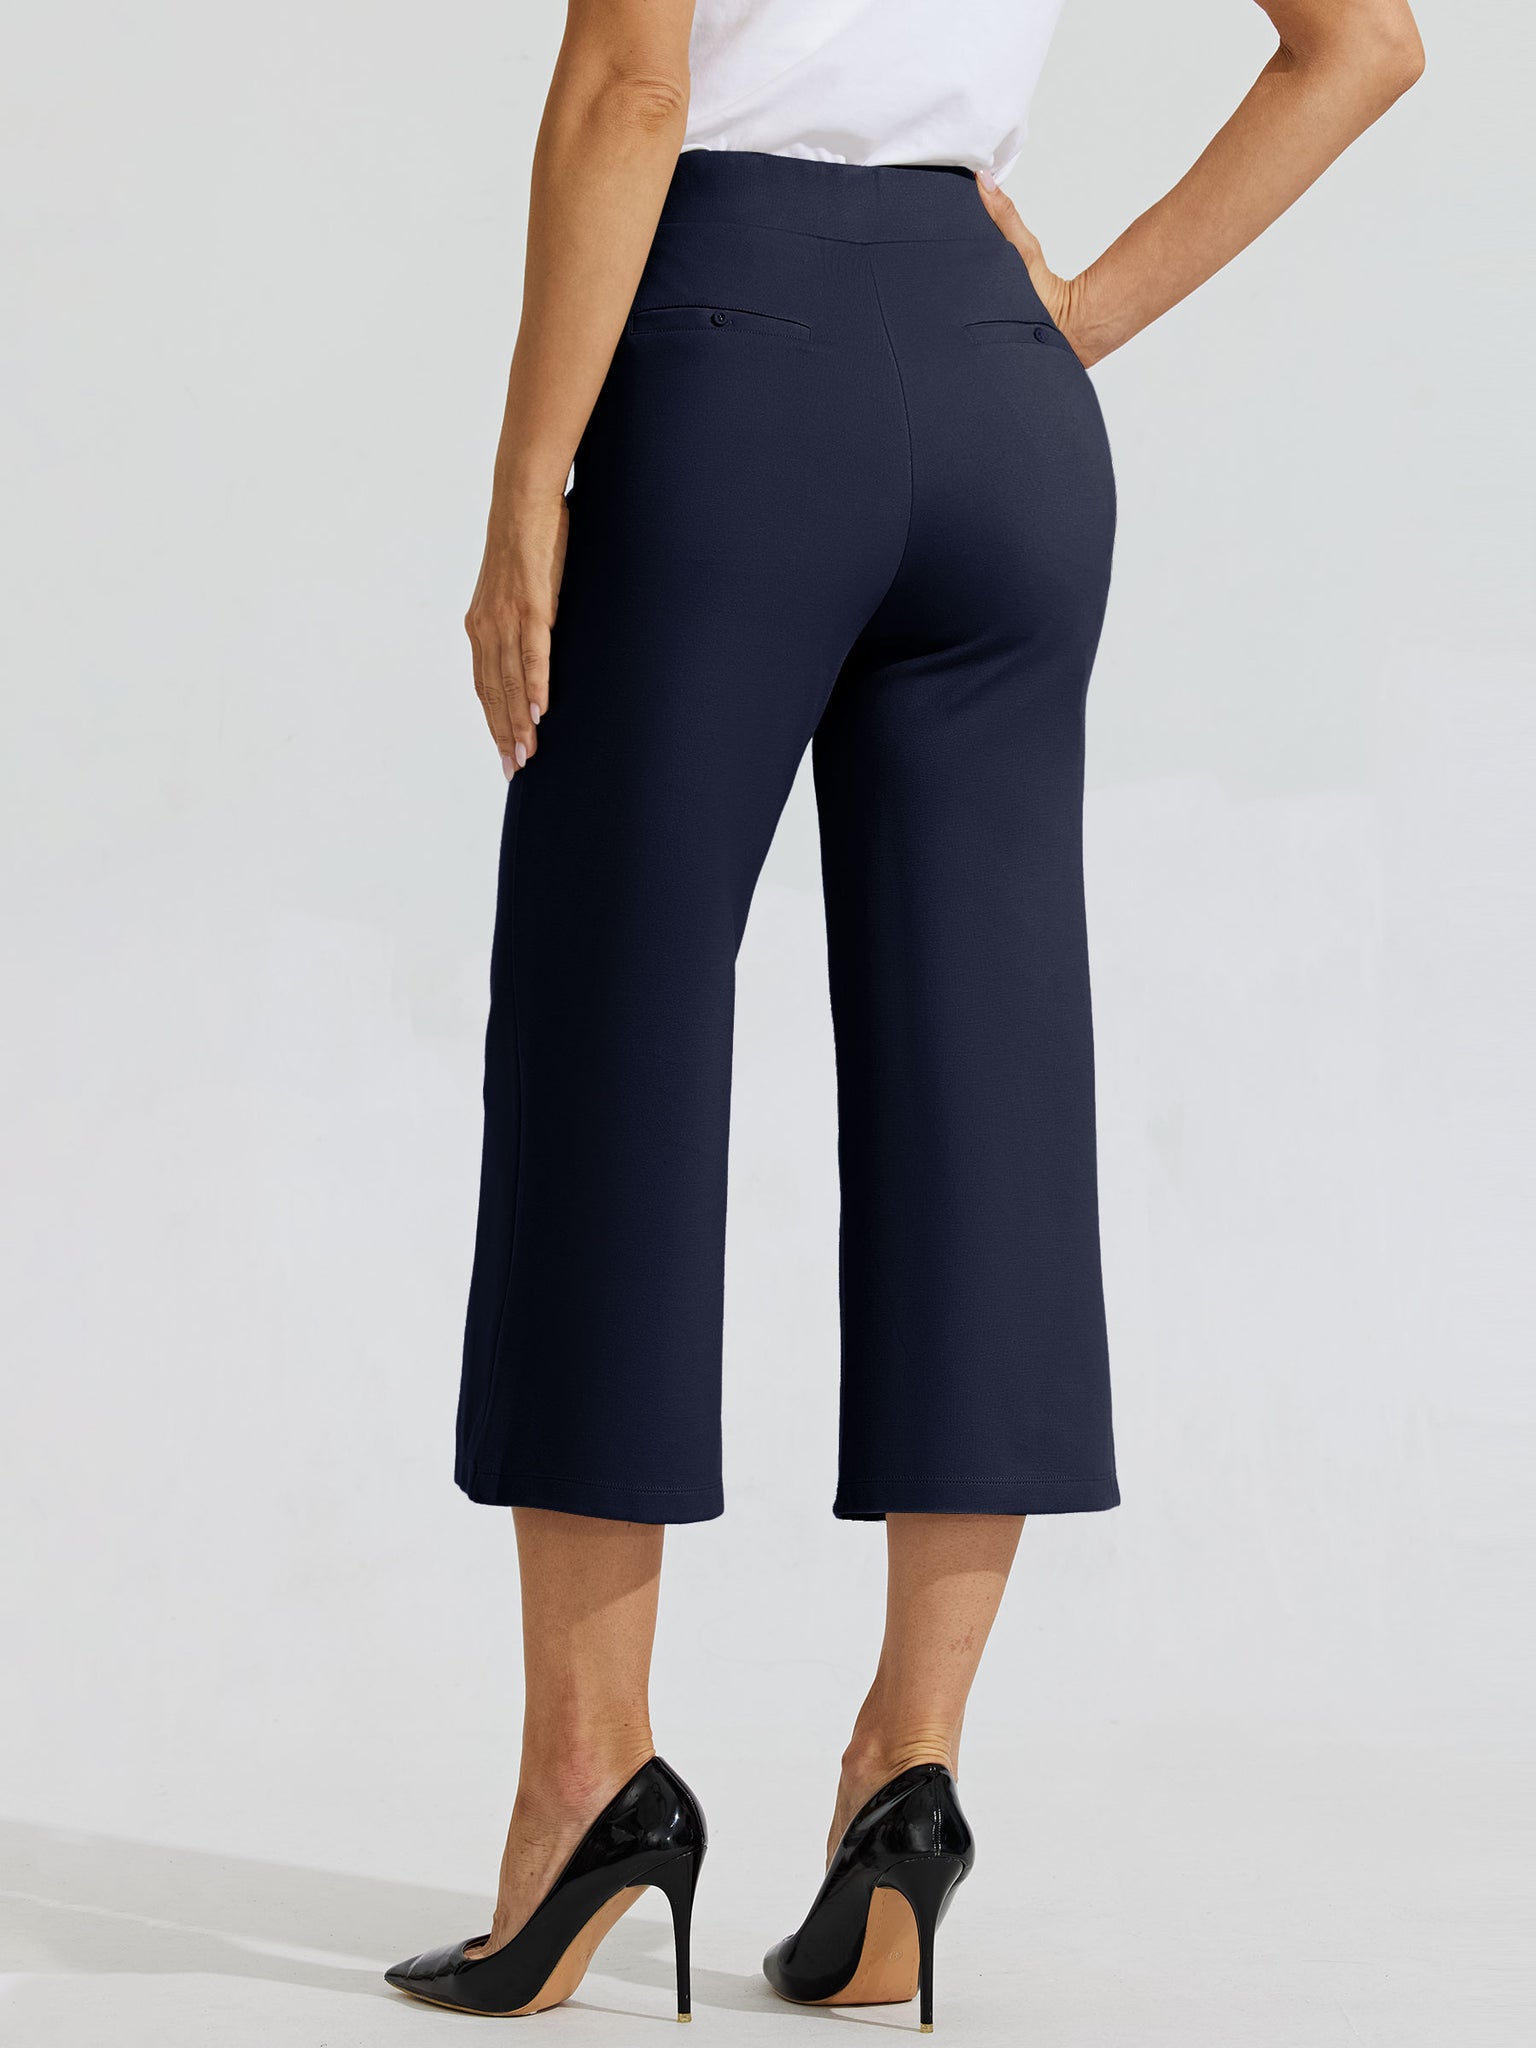 Women's Stretch Capri Wide-Leg Dress Pants_Navy_model3